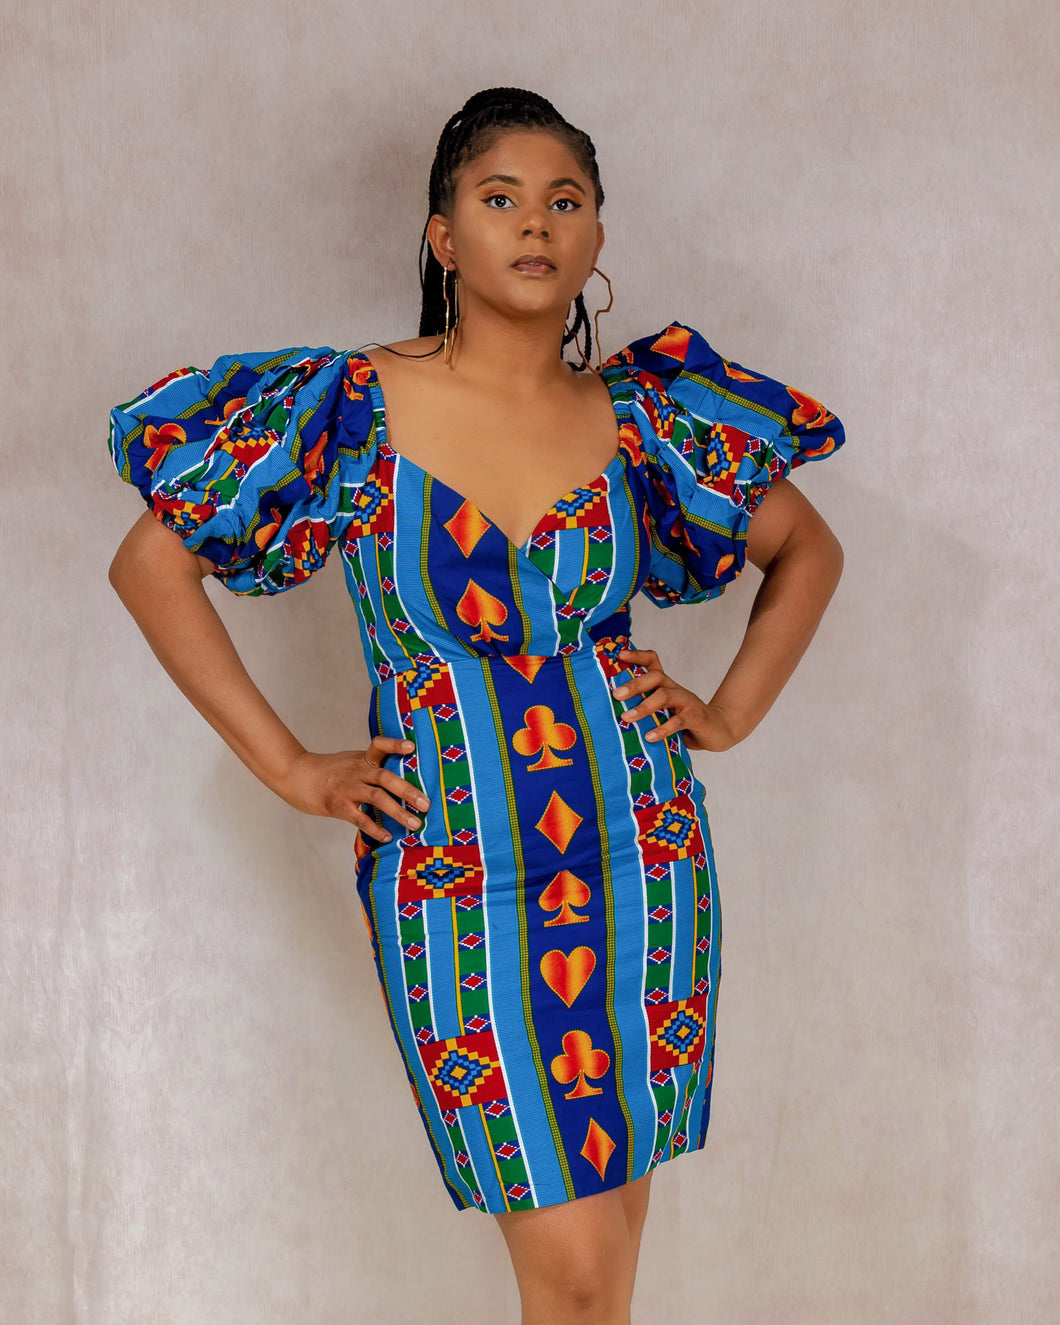 Yebo African print dress